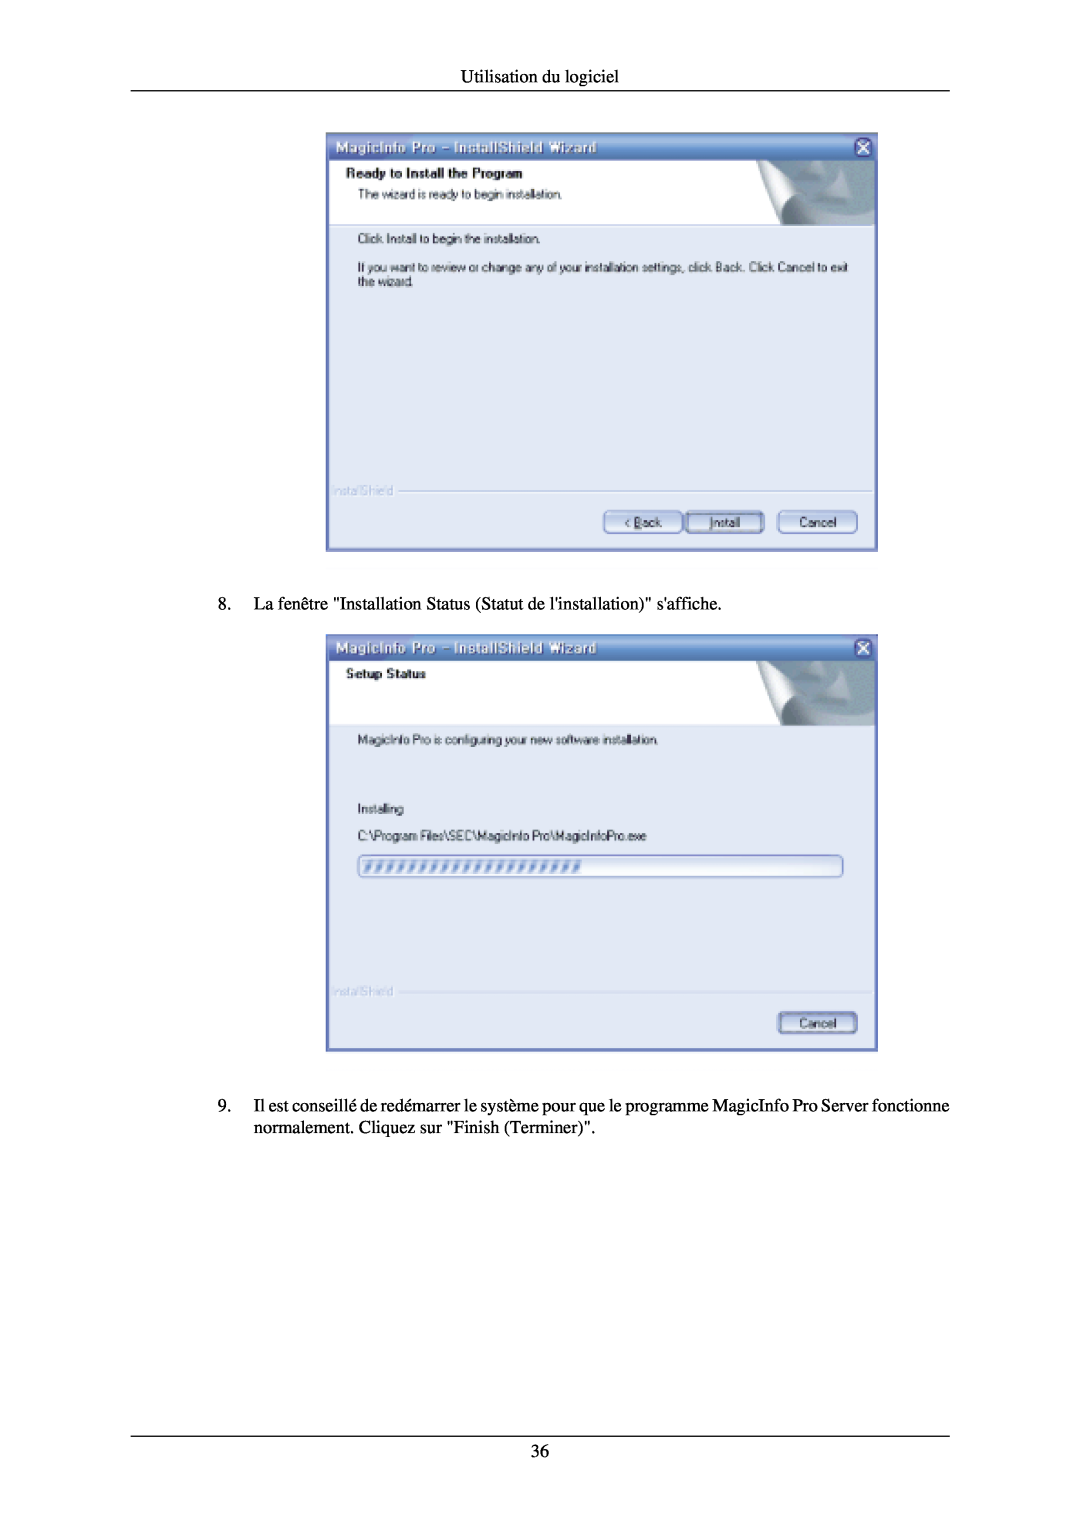 Samsung PH50KLTLBC/EN manual Utilisation du logiciel, La fenêtre Installation Status Statut de linstallation saffiche 